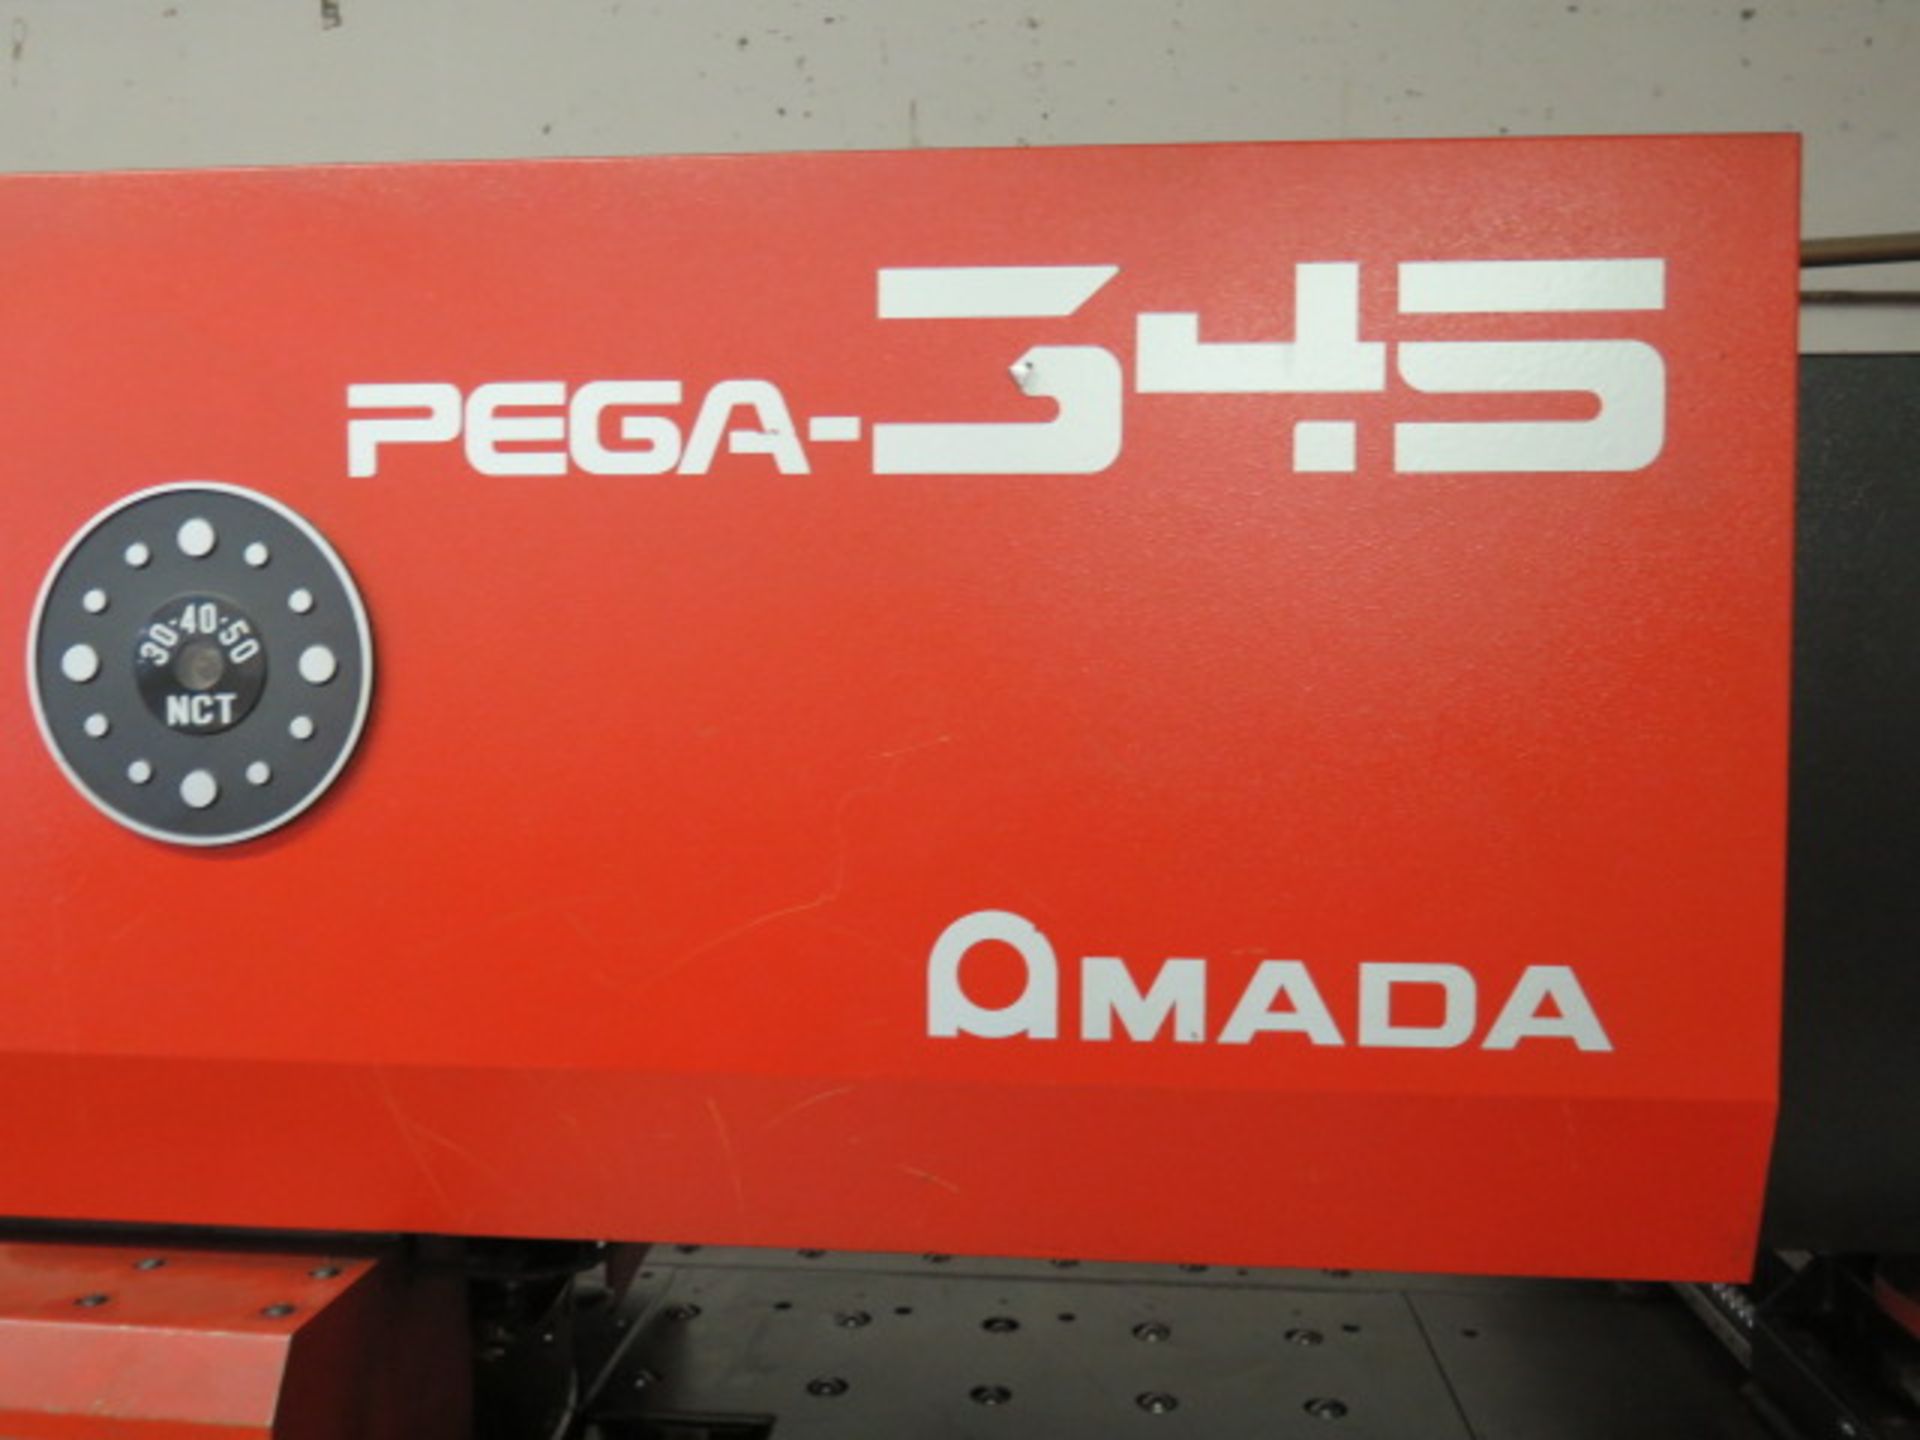 2001 Amada PEGA-345 mdl. PEGA304050 30 Ton 58-Station CNC Turret Punch Press s/n AQ450363,SOLD AS IS - Image 12 of 16